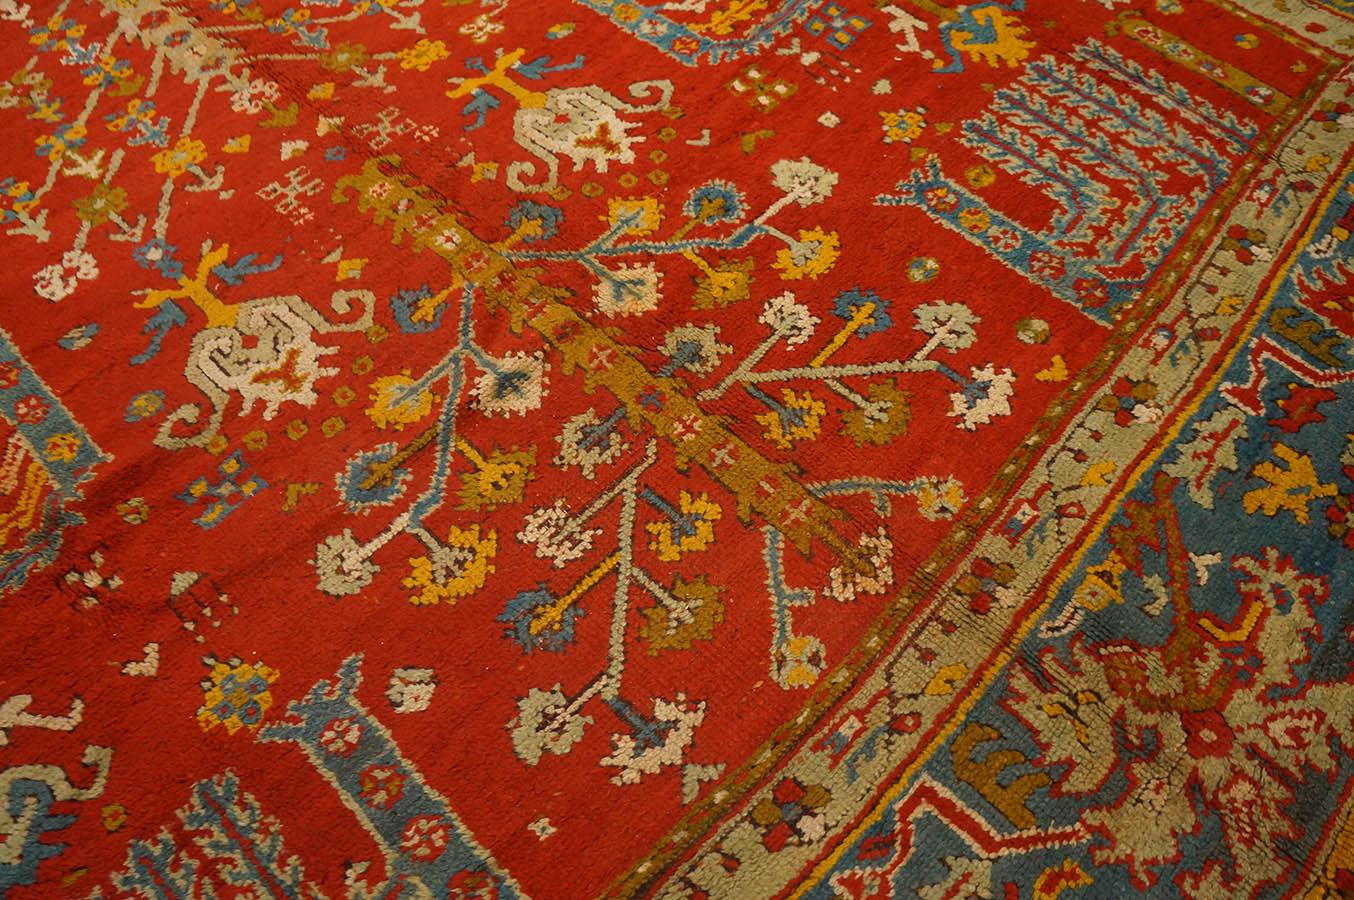 Late 19th Century Turkish Oushak Carpet  ( 11' 5'' x 14' 6'' - 348 x 442 cm ) For Sale 3